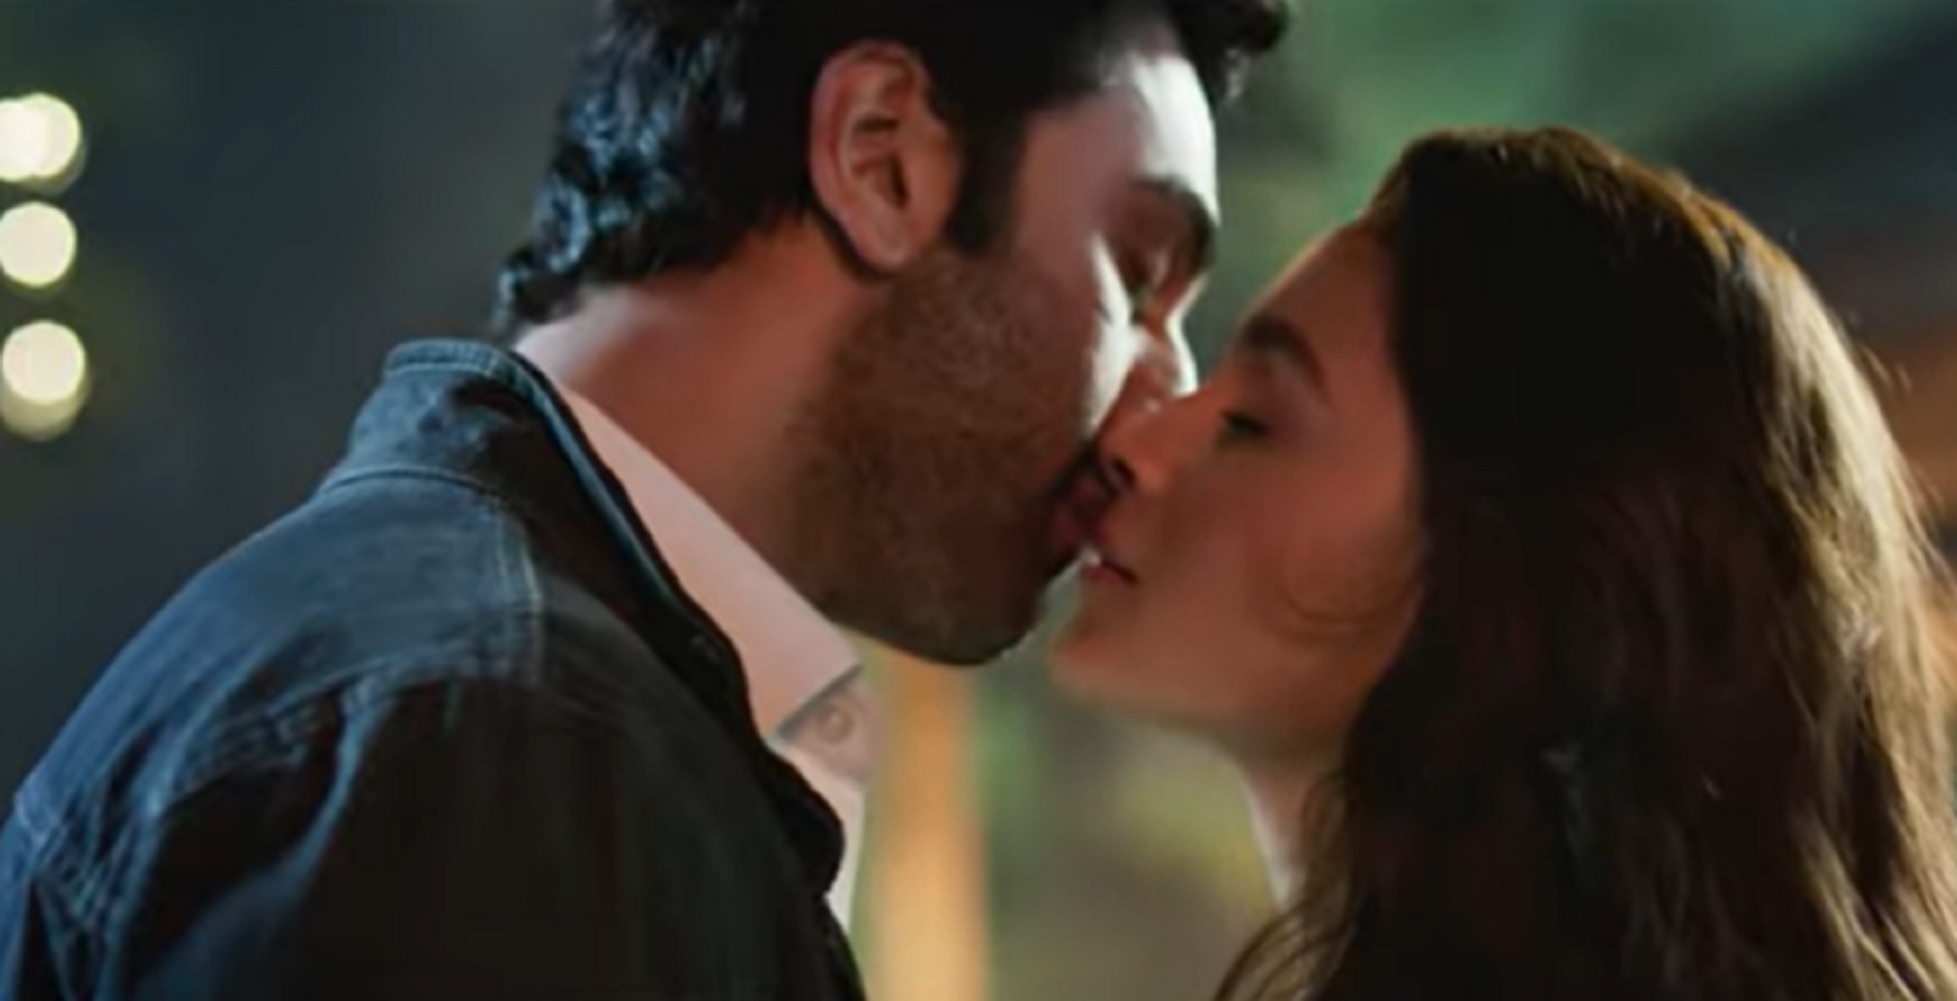 Alia Bhatt & Ranbir Kapoor Share Their First On-Screen Kiss In Brahmastra Trailer, Fans Go Gaga